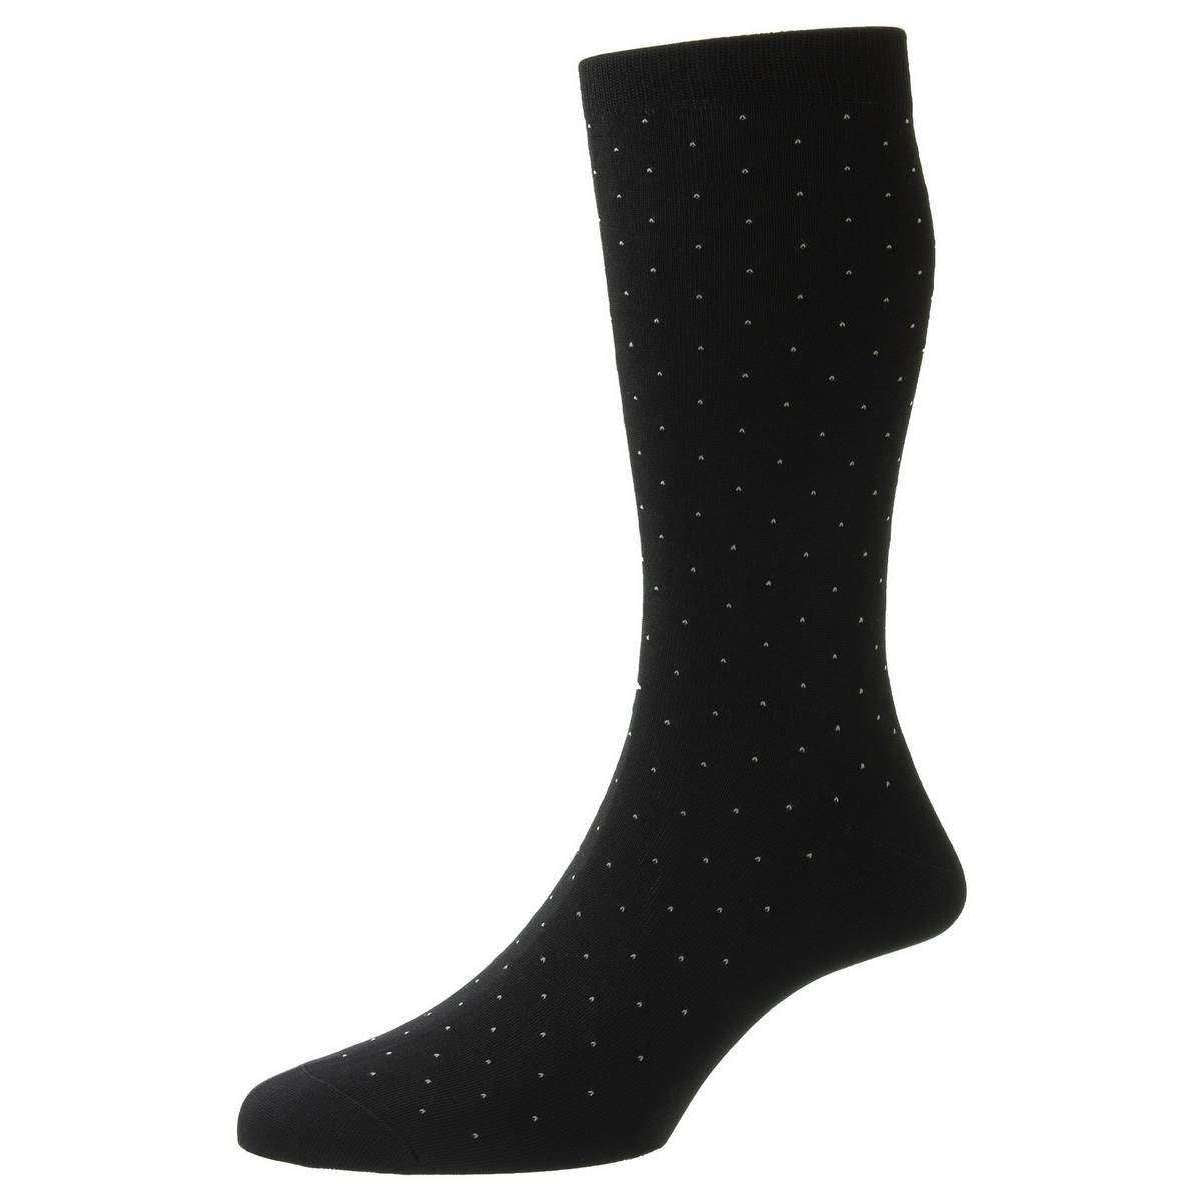 Pantherella Gadsbury Cotton Fil D’Ecosse Pin Dot Socks - Black